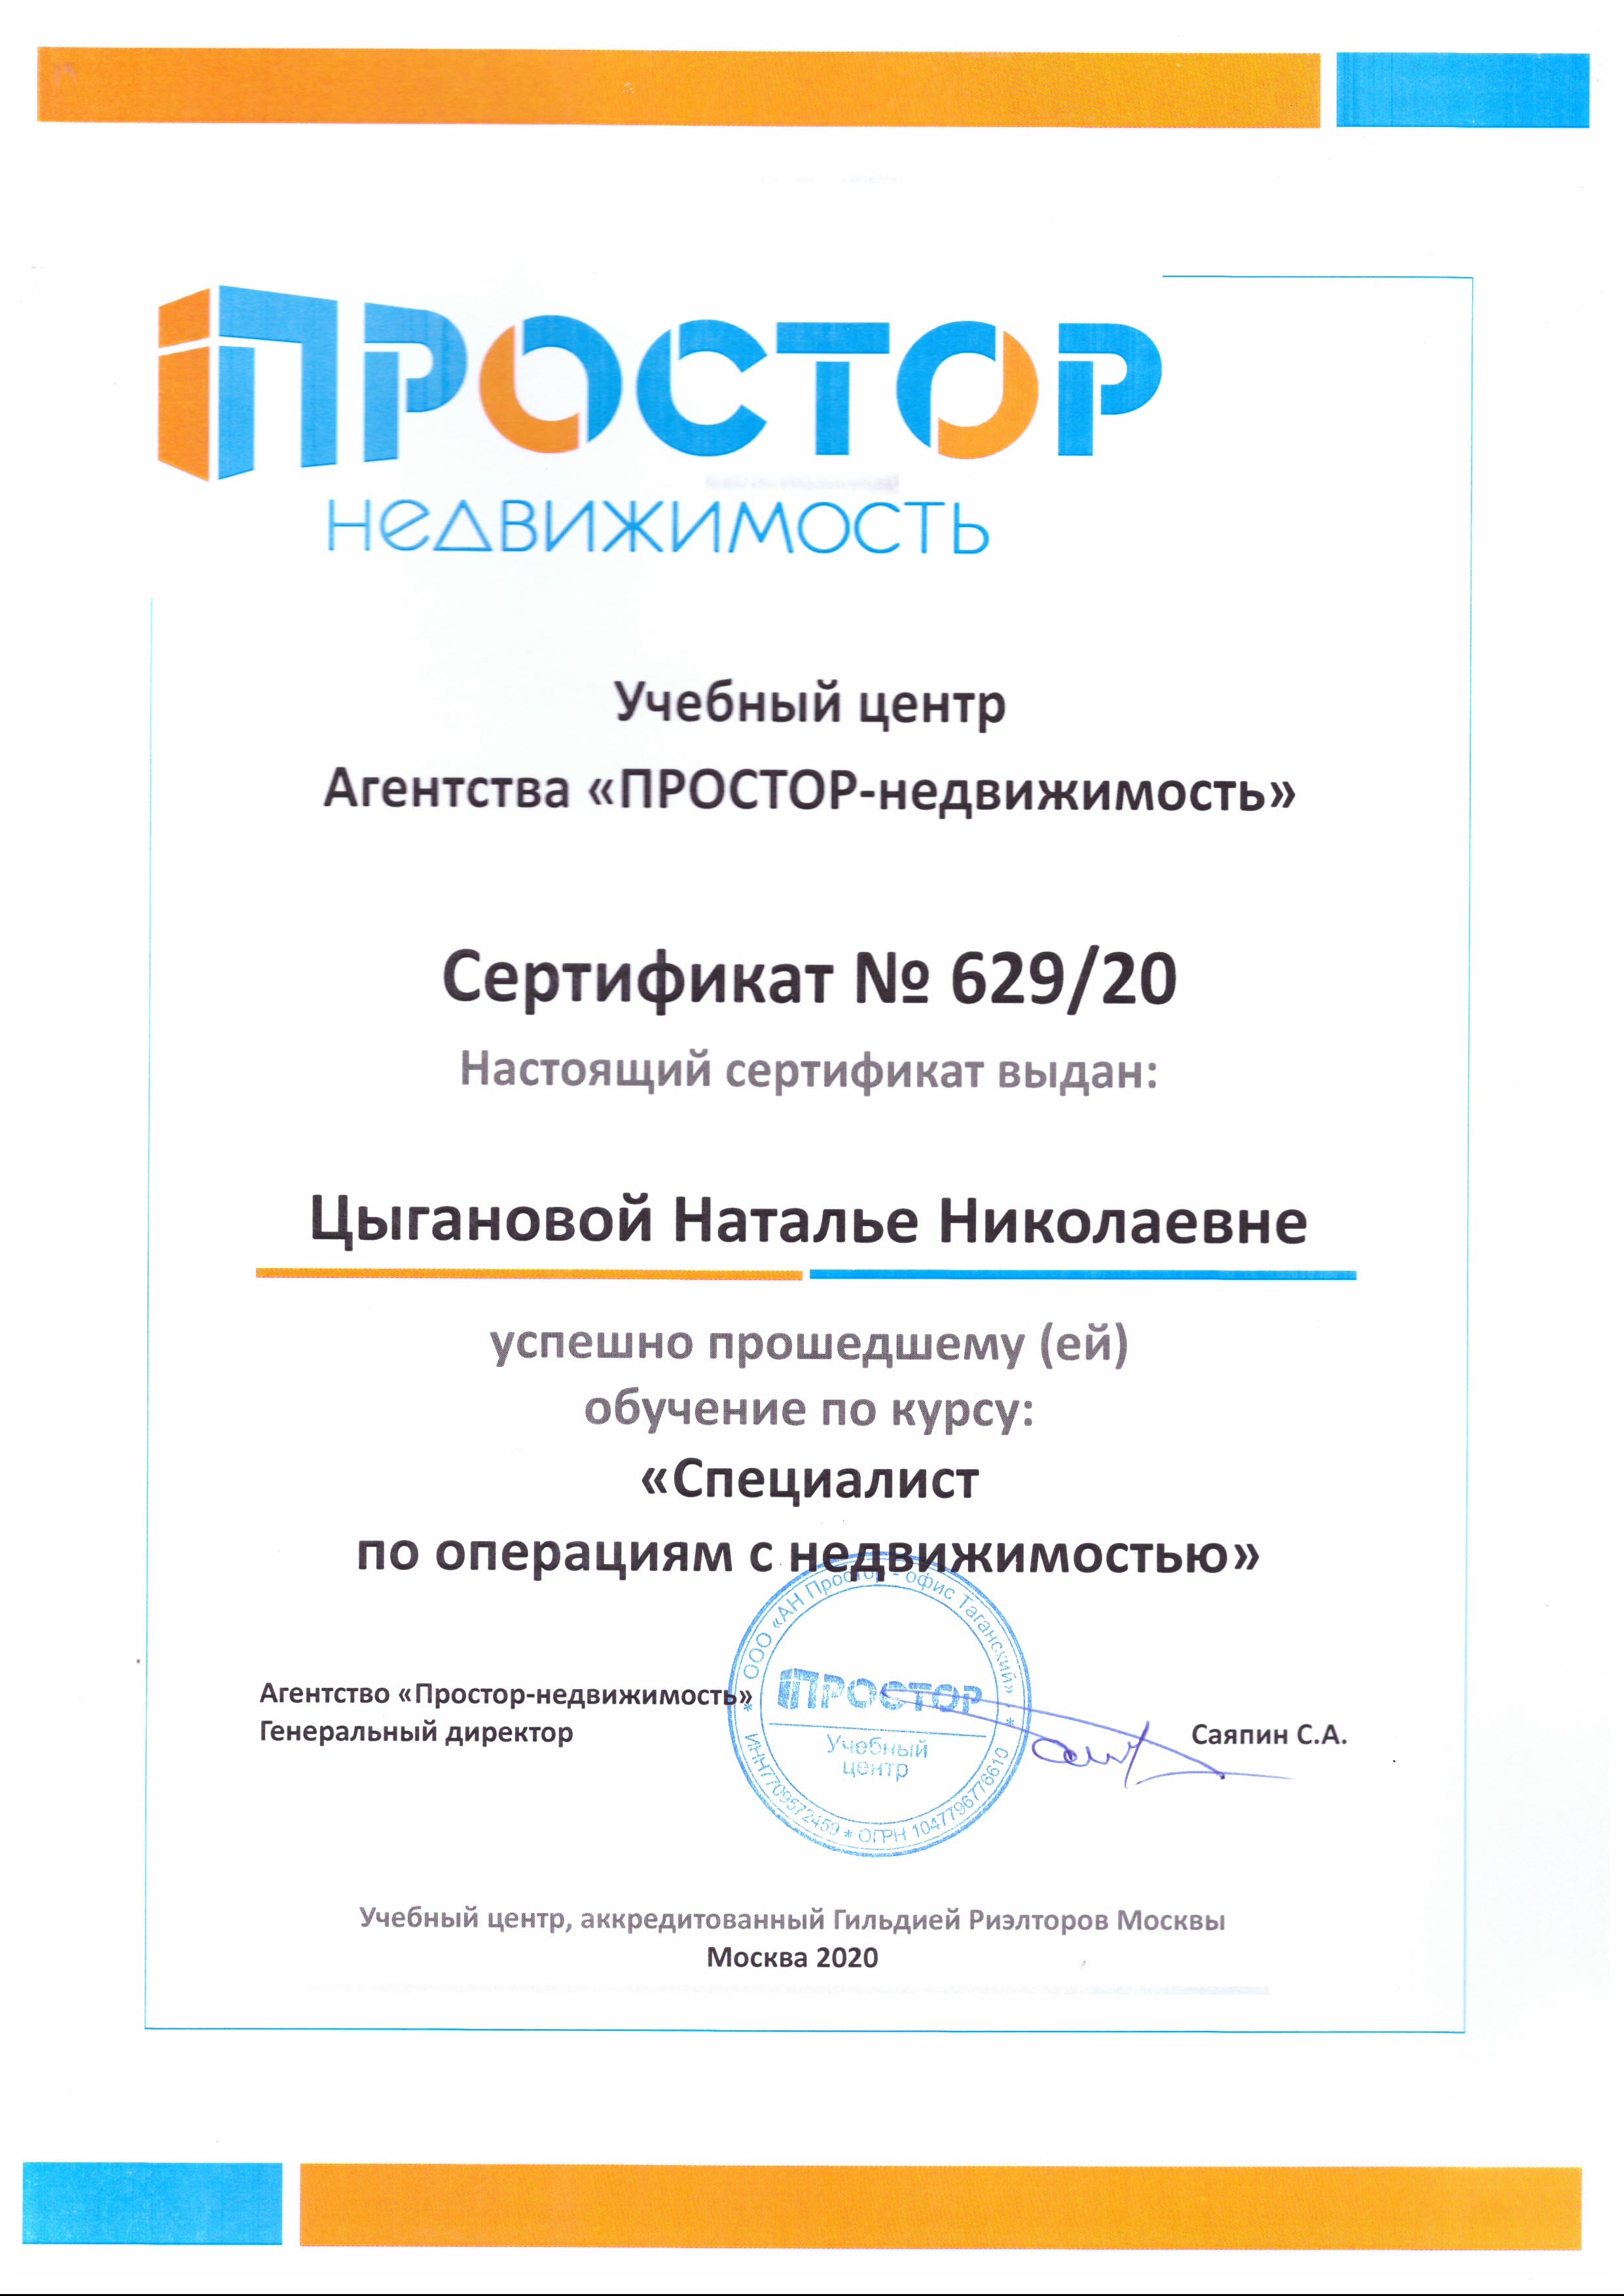 Цыганова - сертификат